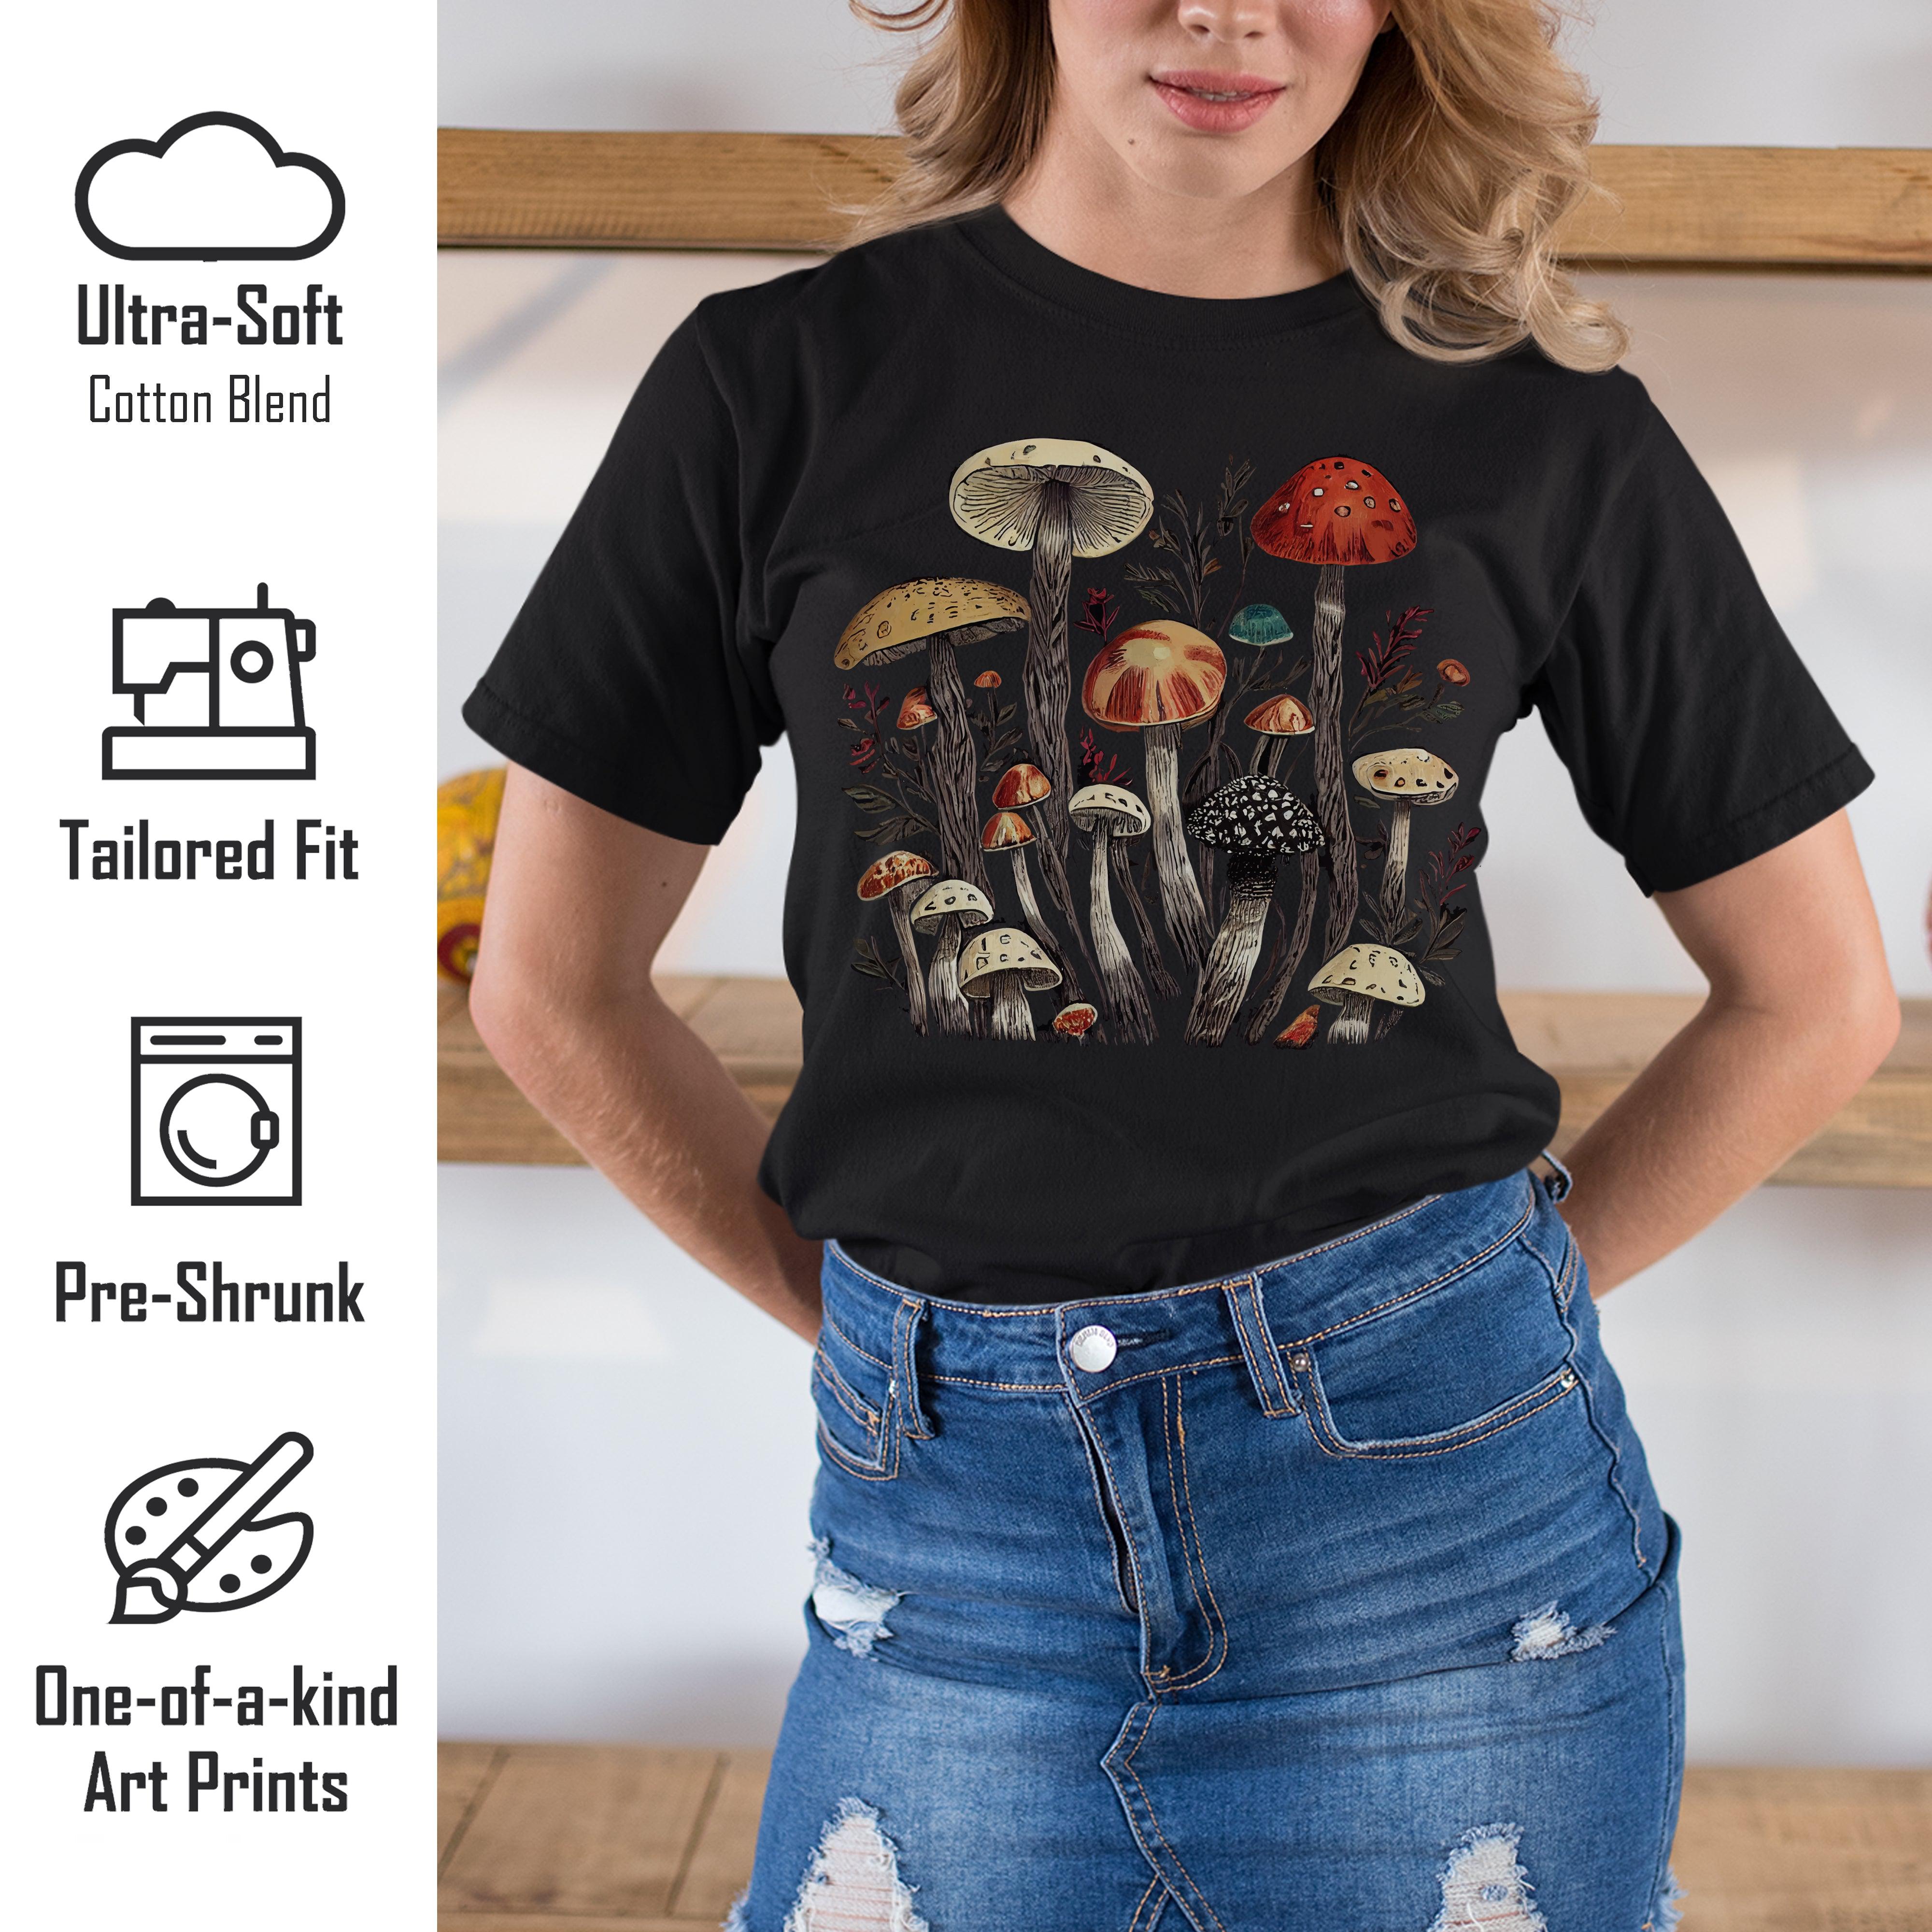 Mushroom Fields Womens Cottagecore Aesthetic T-Shirt